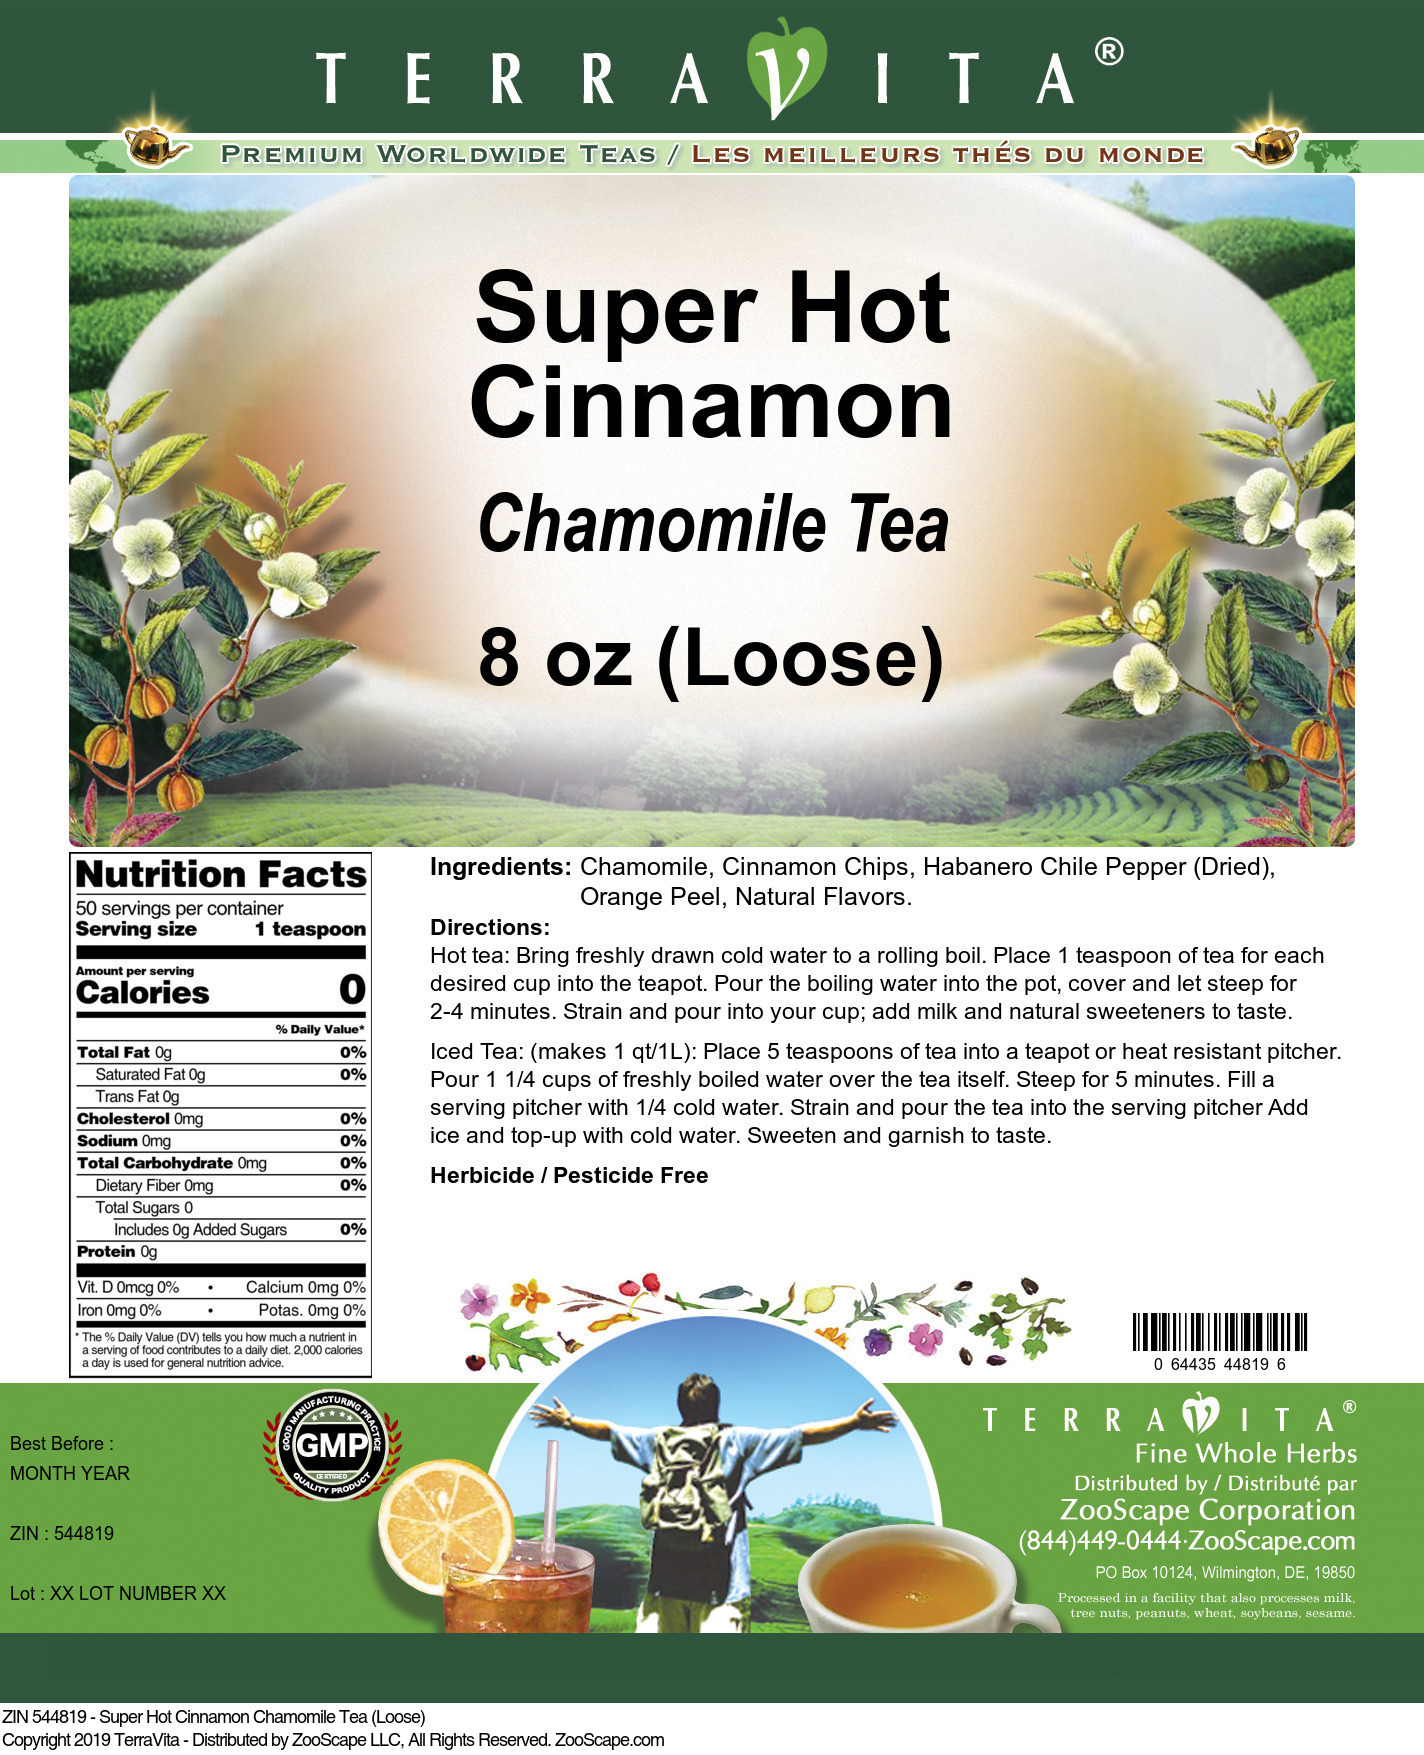 Super Hot Cinnamon Chamomile Tea (Loose) - Label